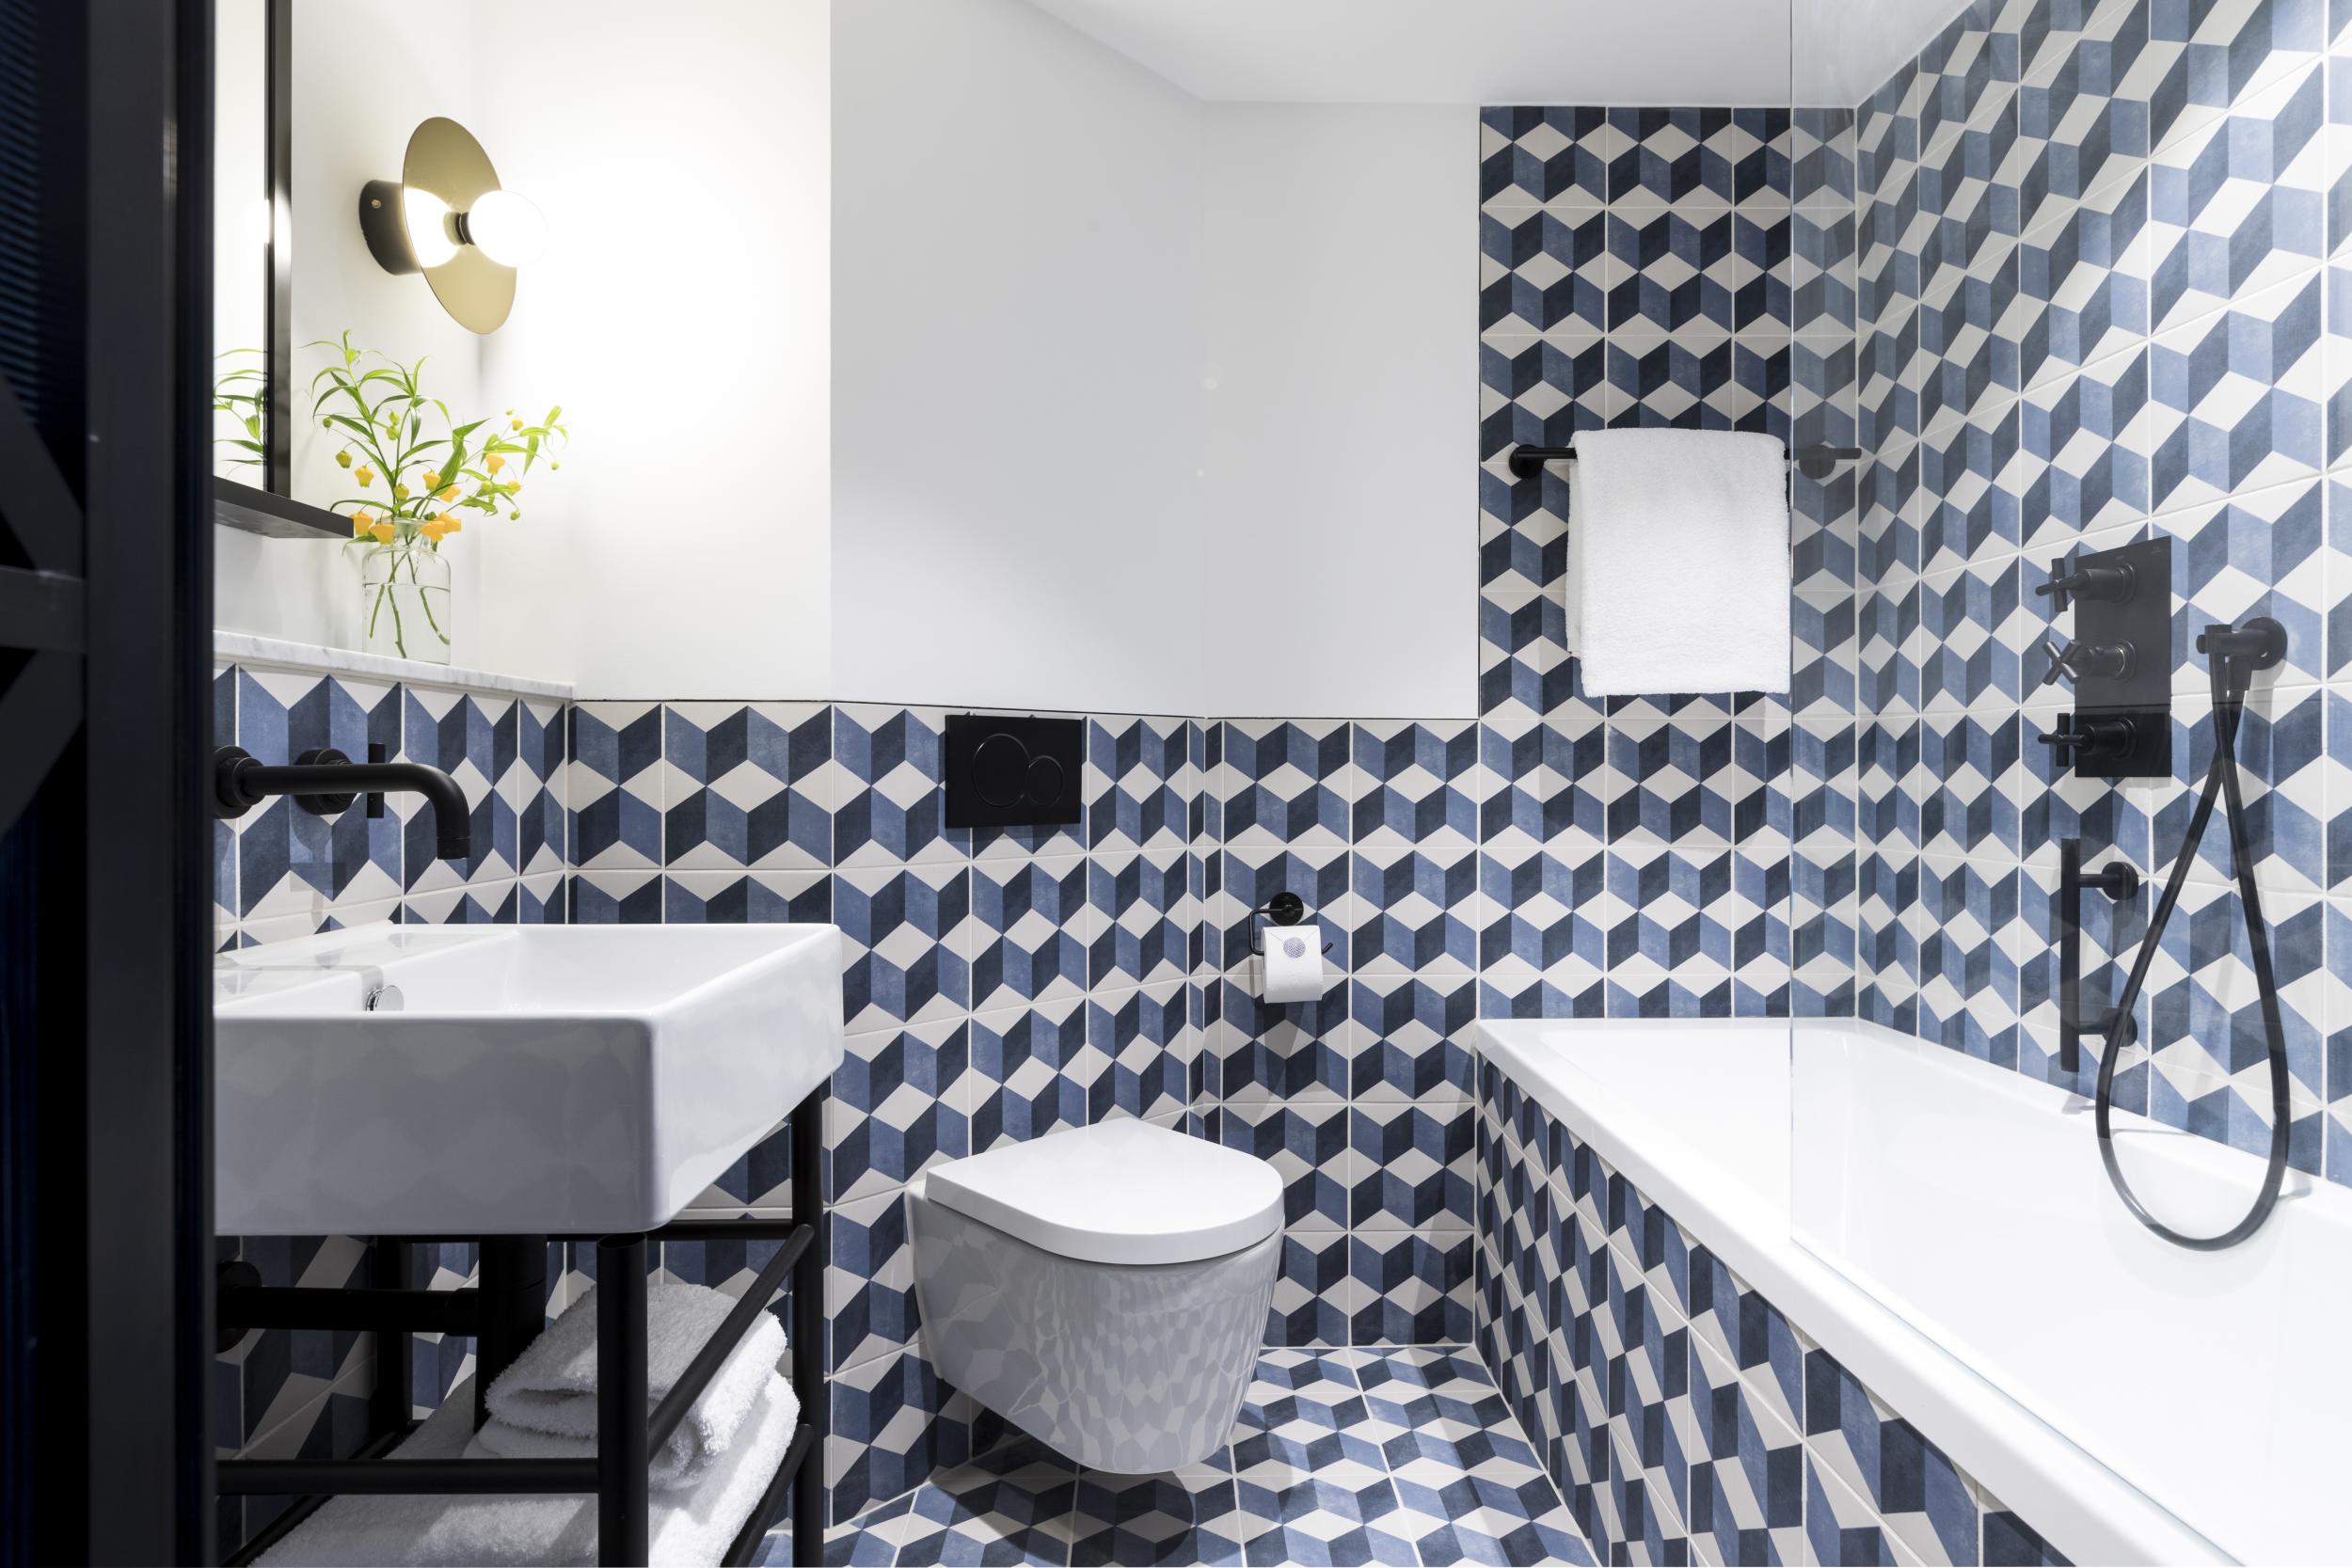 Bathrooms feature geometric tiles